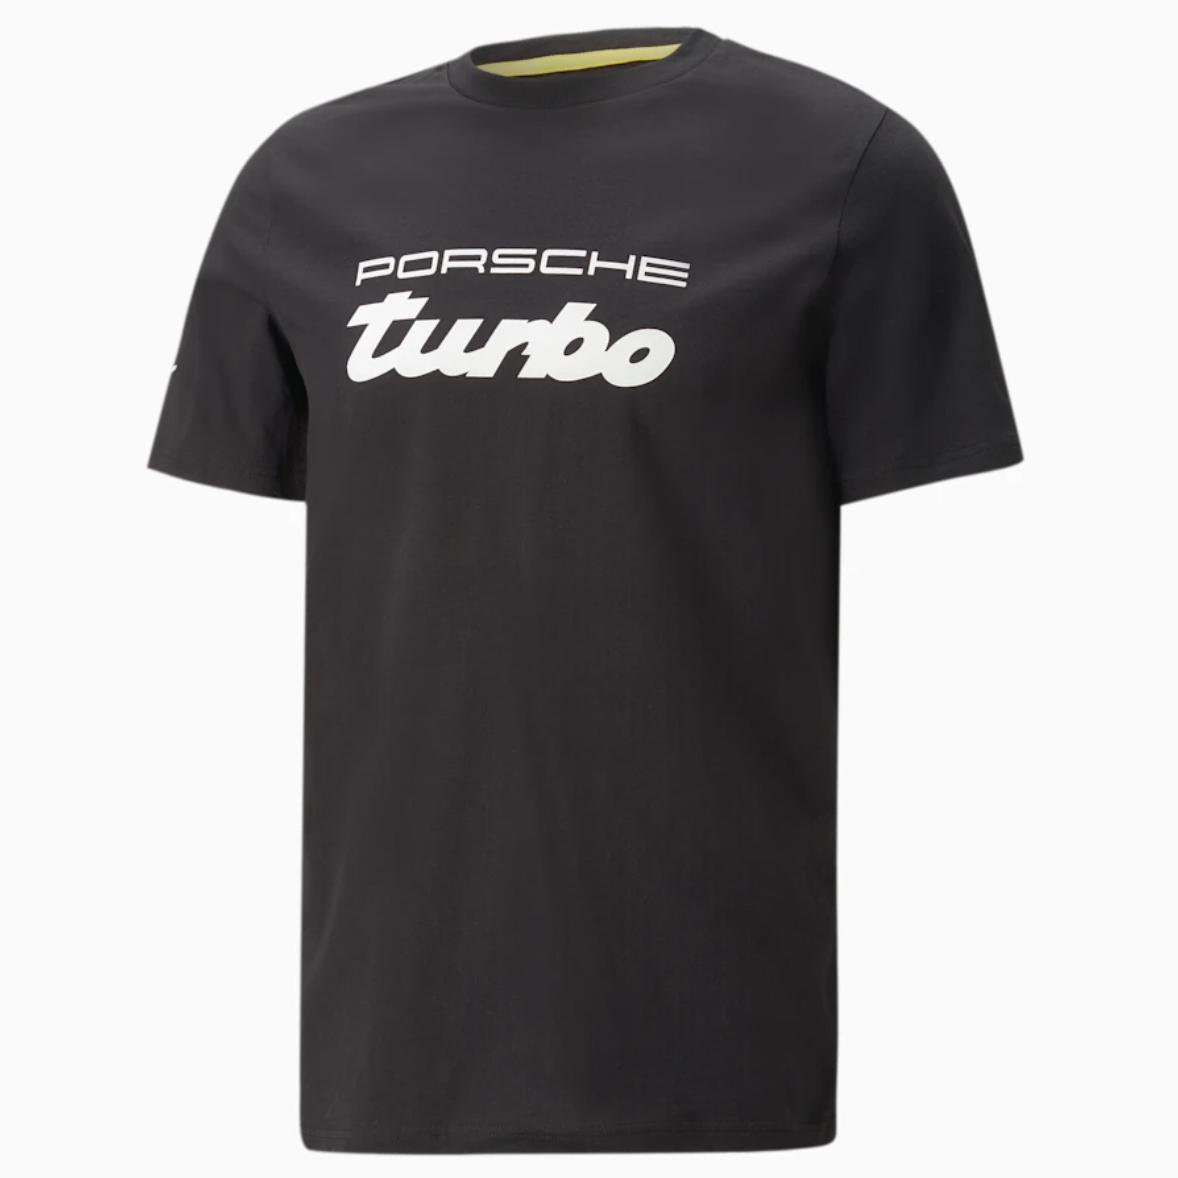 Puma PORSCHE TURBO Legacy Logo Tee - Herren T-Shirt Baumwolle Schwarz 538236-01 ORIGINAL